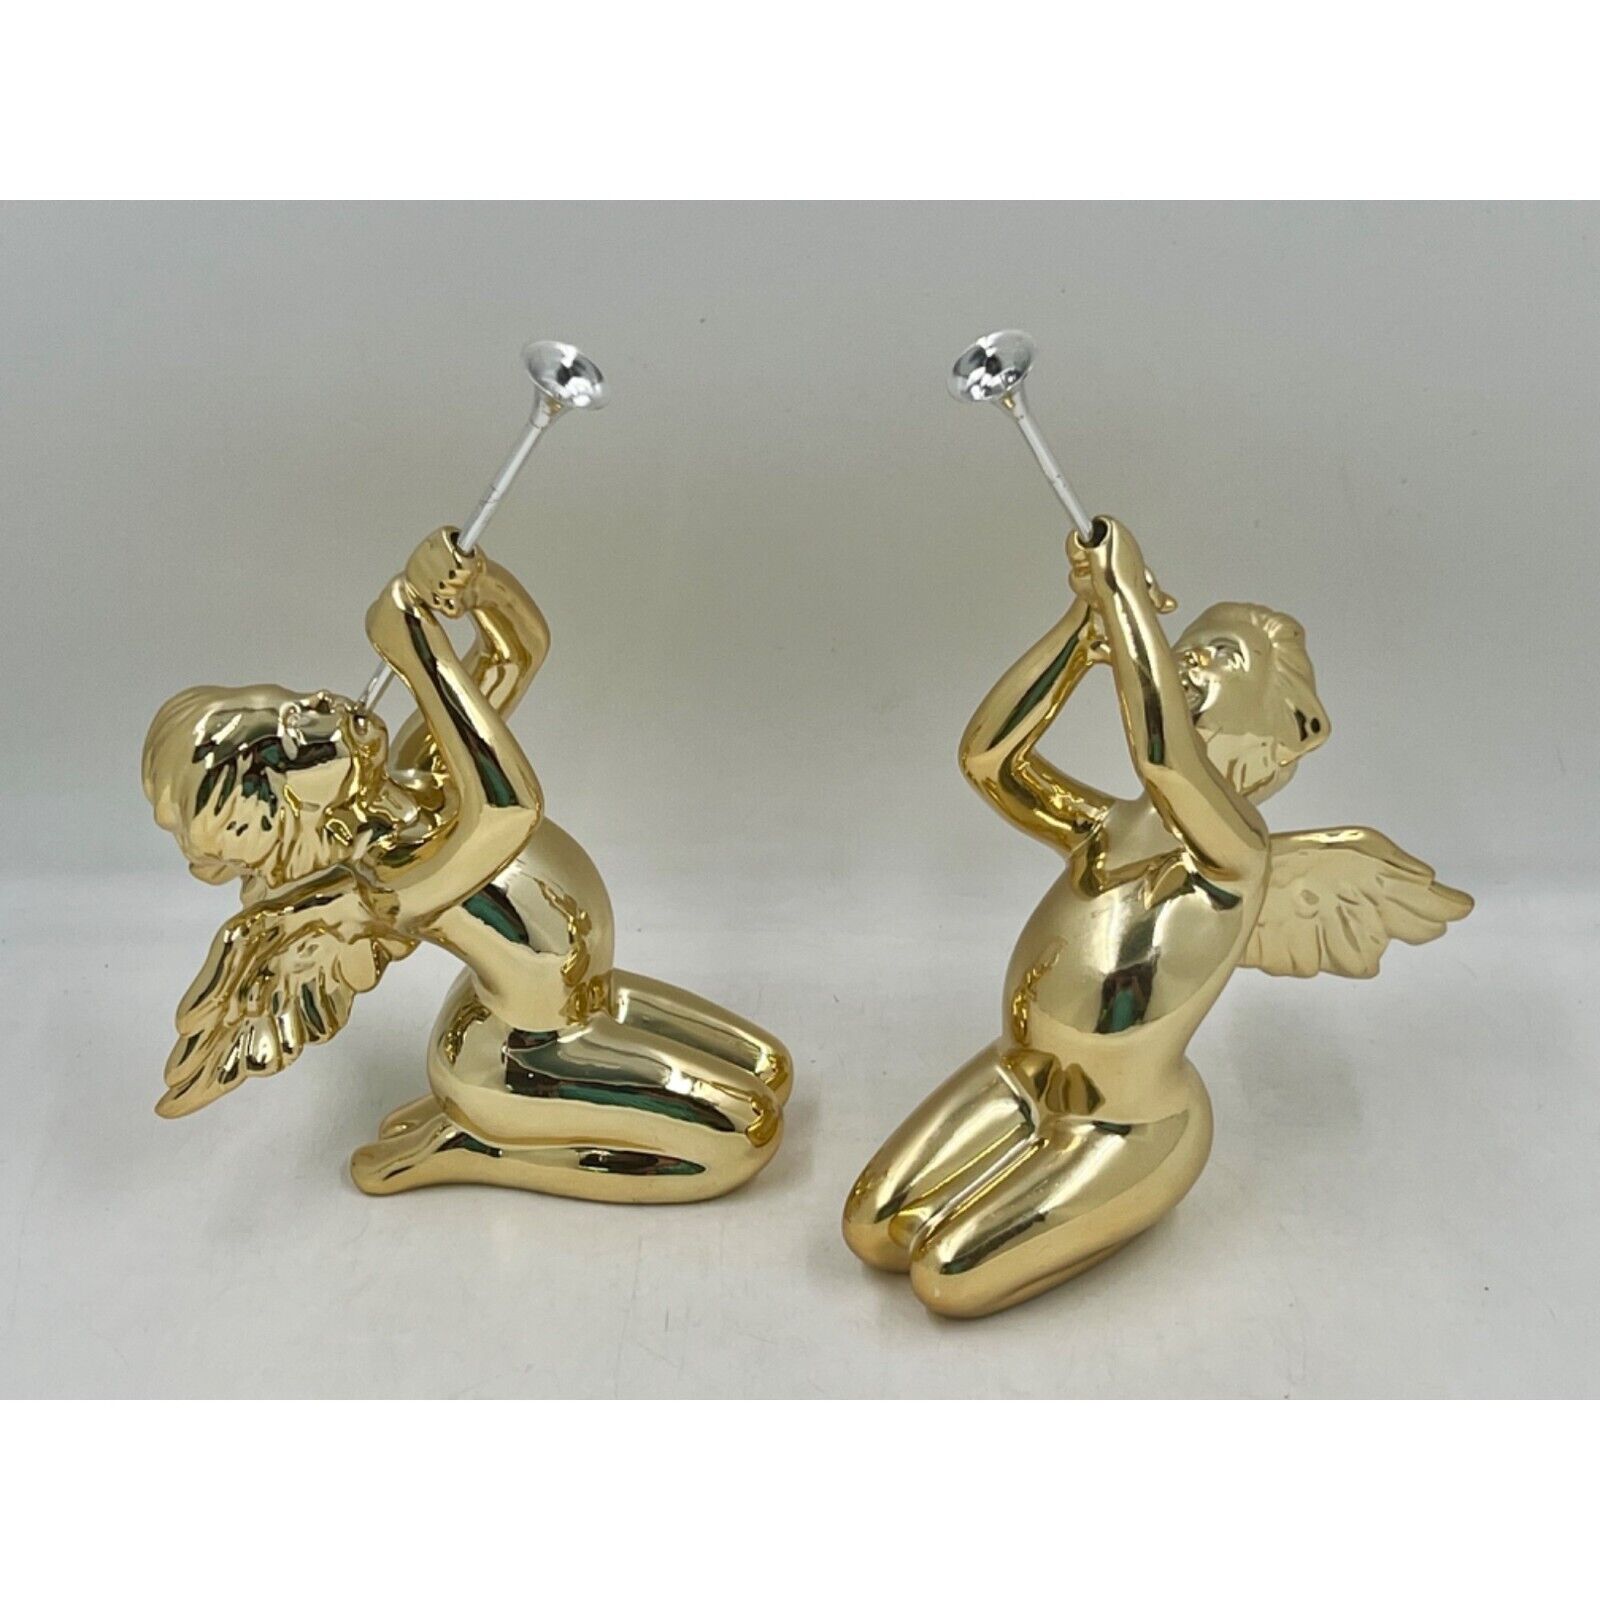 Vtg Pair of Kneeling RETIRED Gold Cherub Angel Figurines w/Trumpet Horn Dept 56